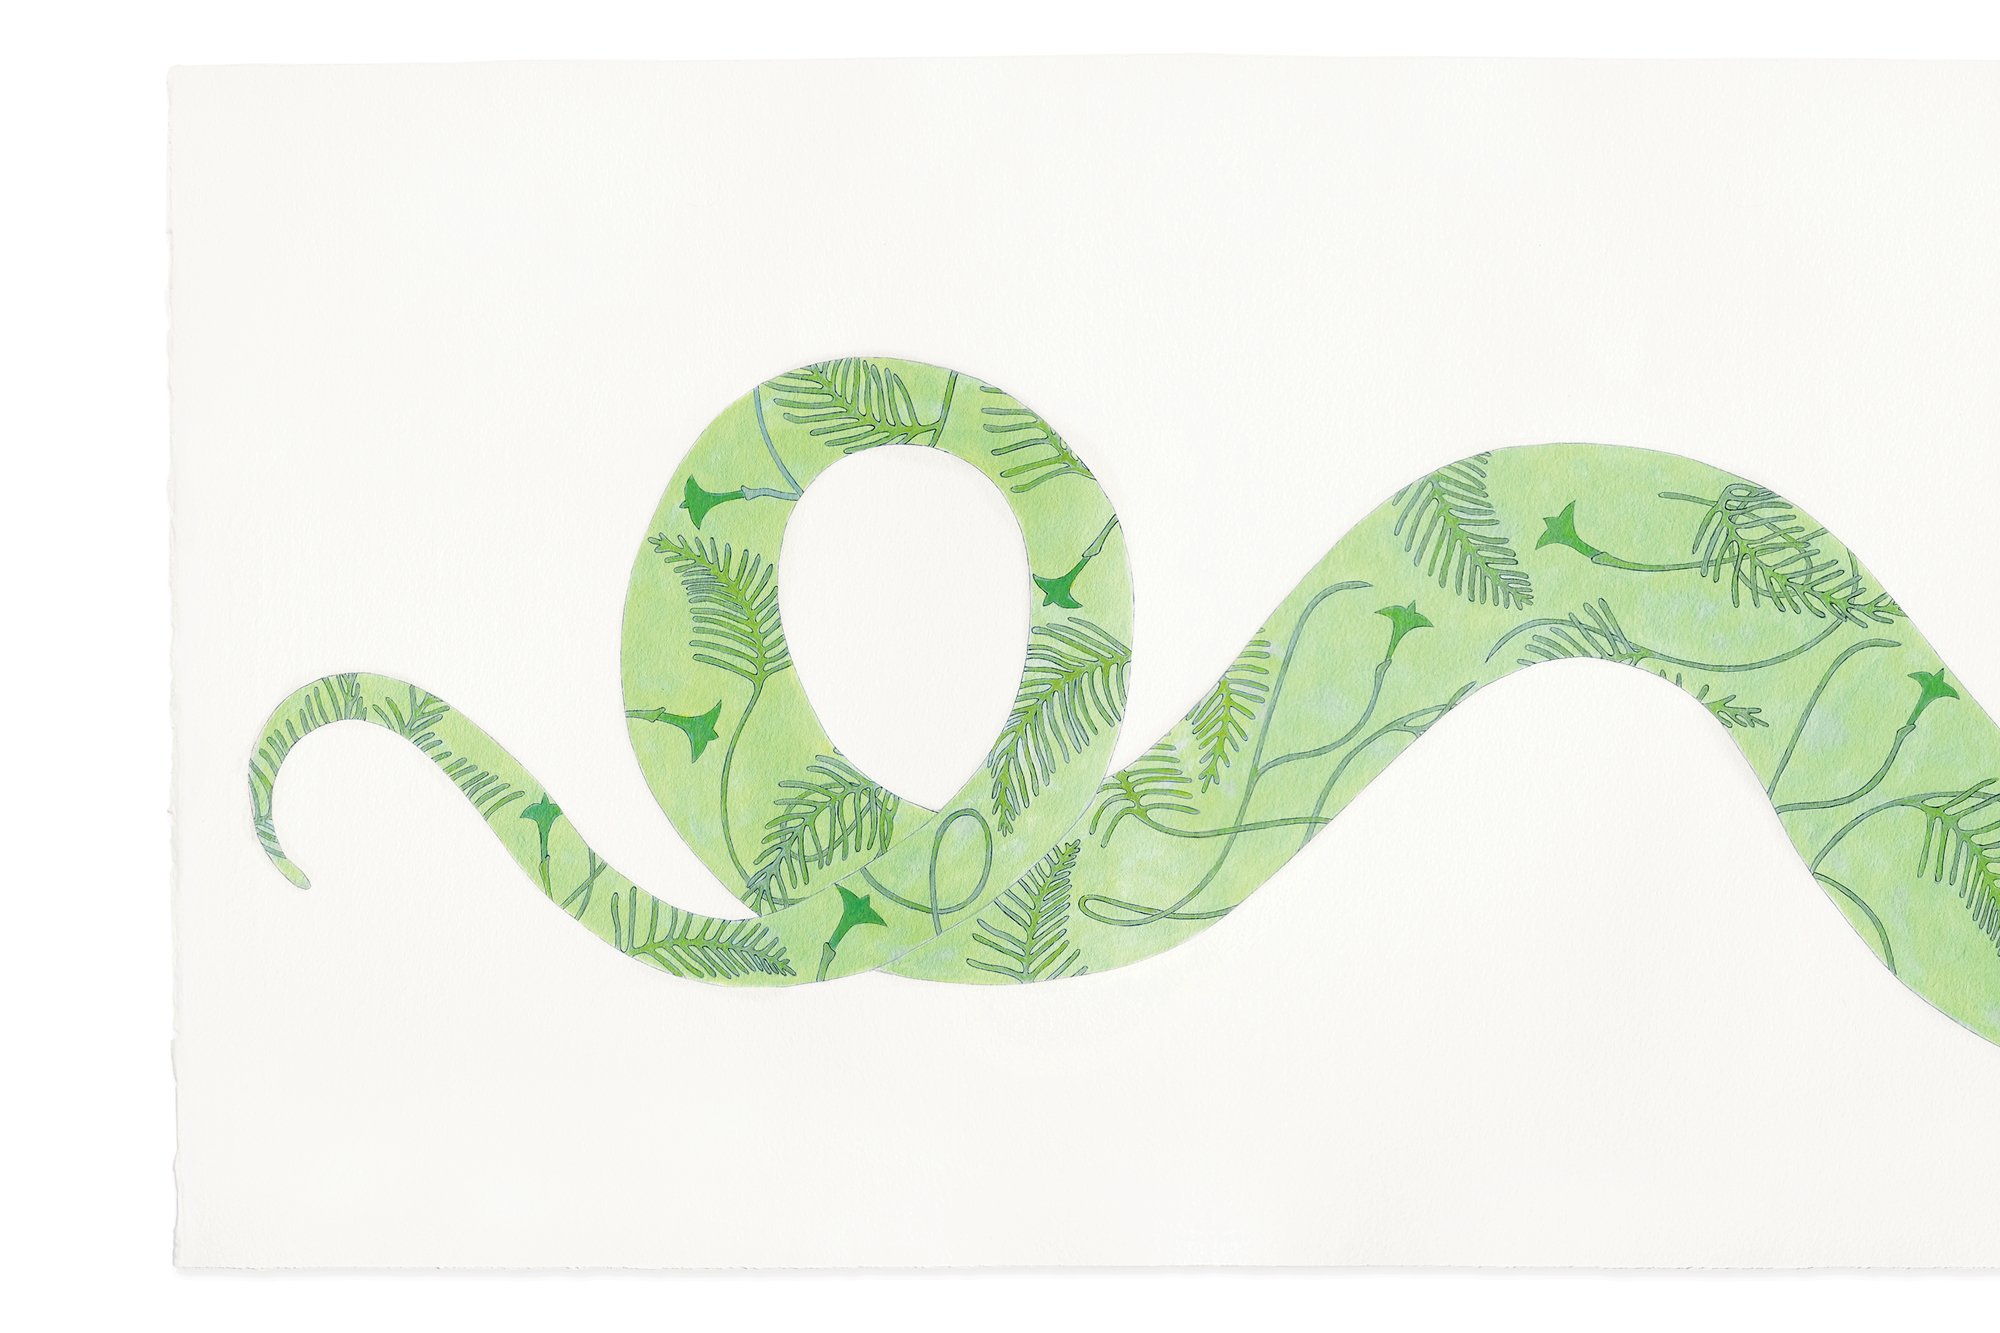   Sun Snake,  2022 Acrylic on paper, 15”x55” 